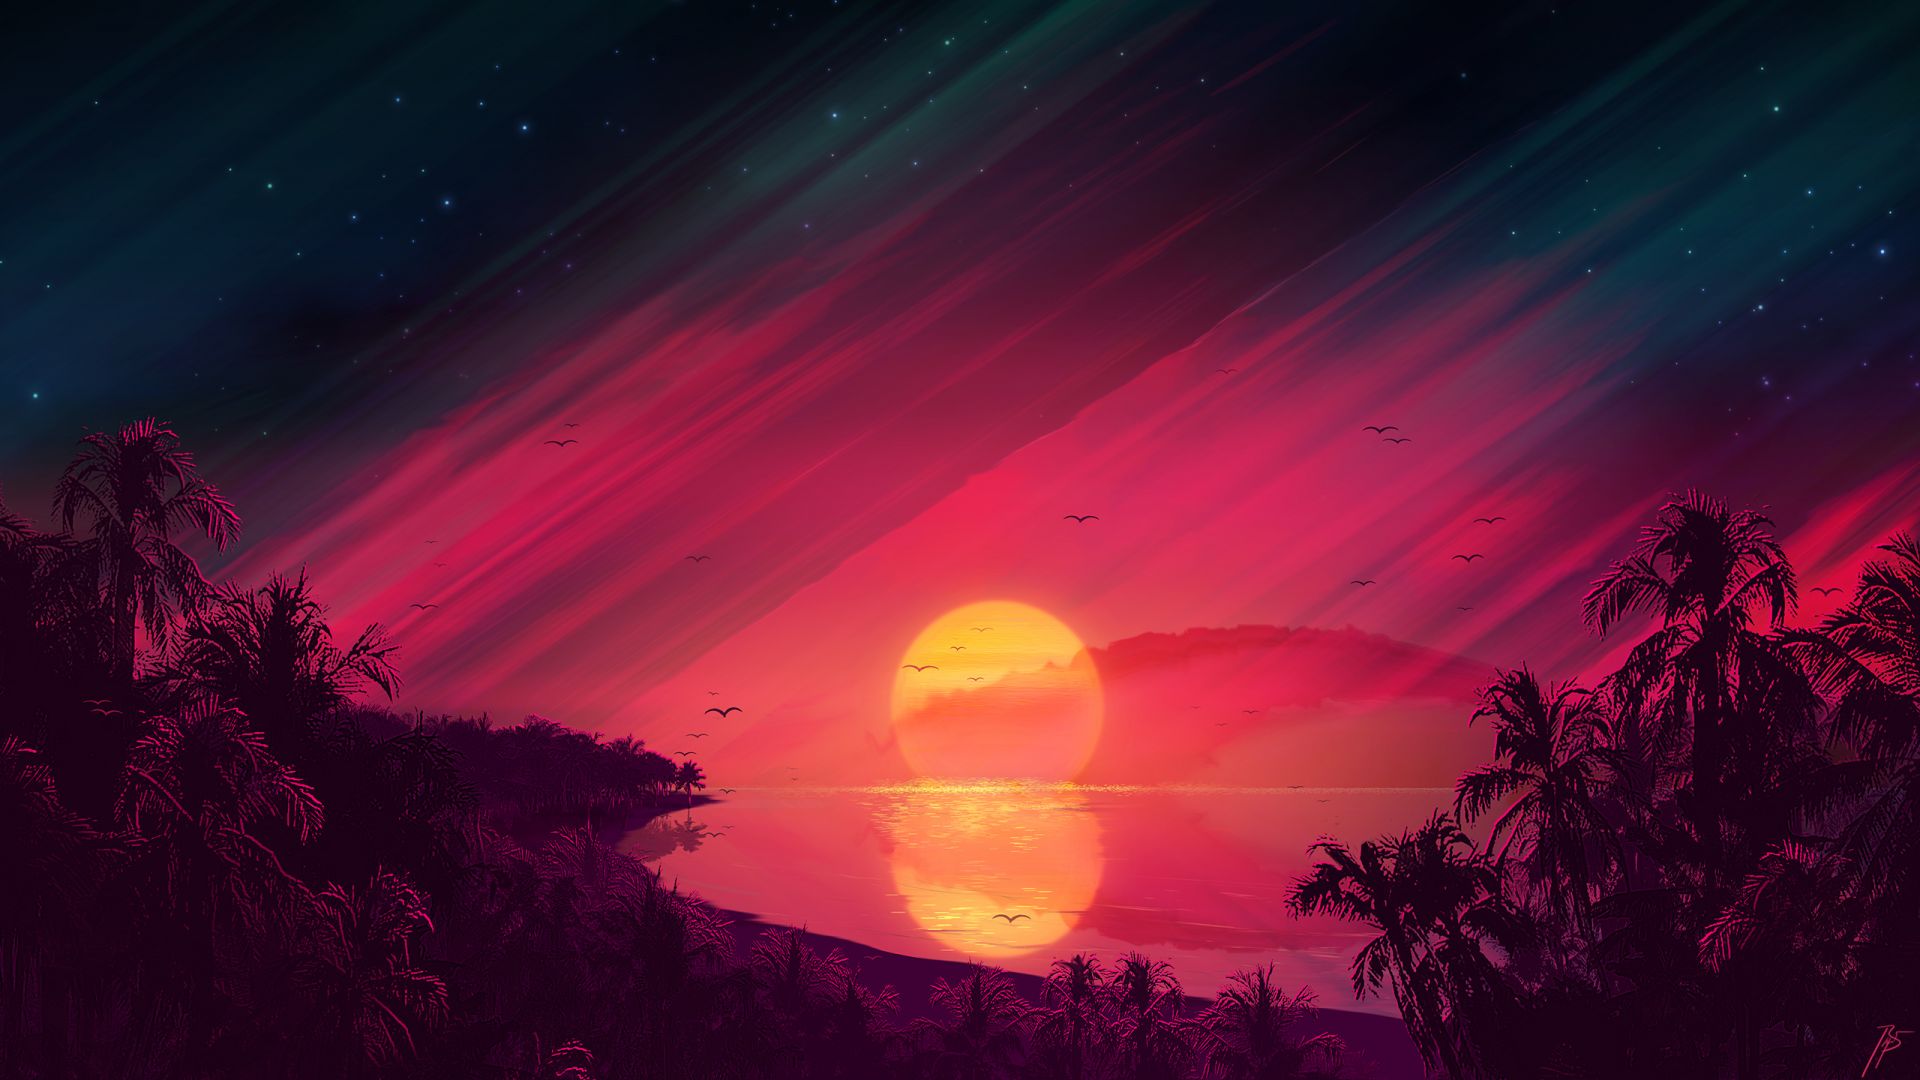 Sunset Lake Landscape Digital Art Wallpaper HD Image Picture